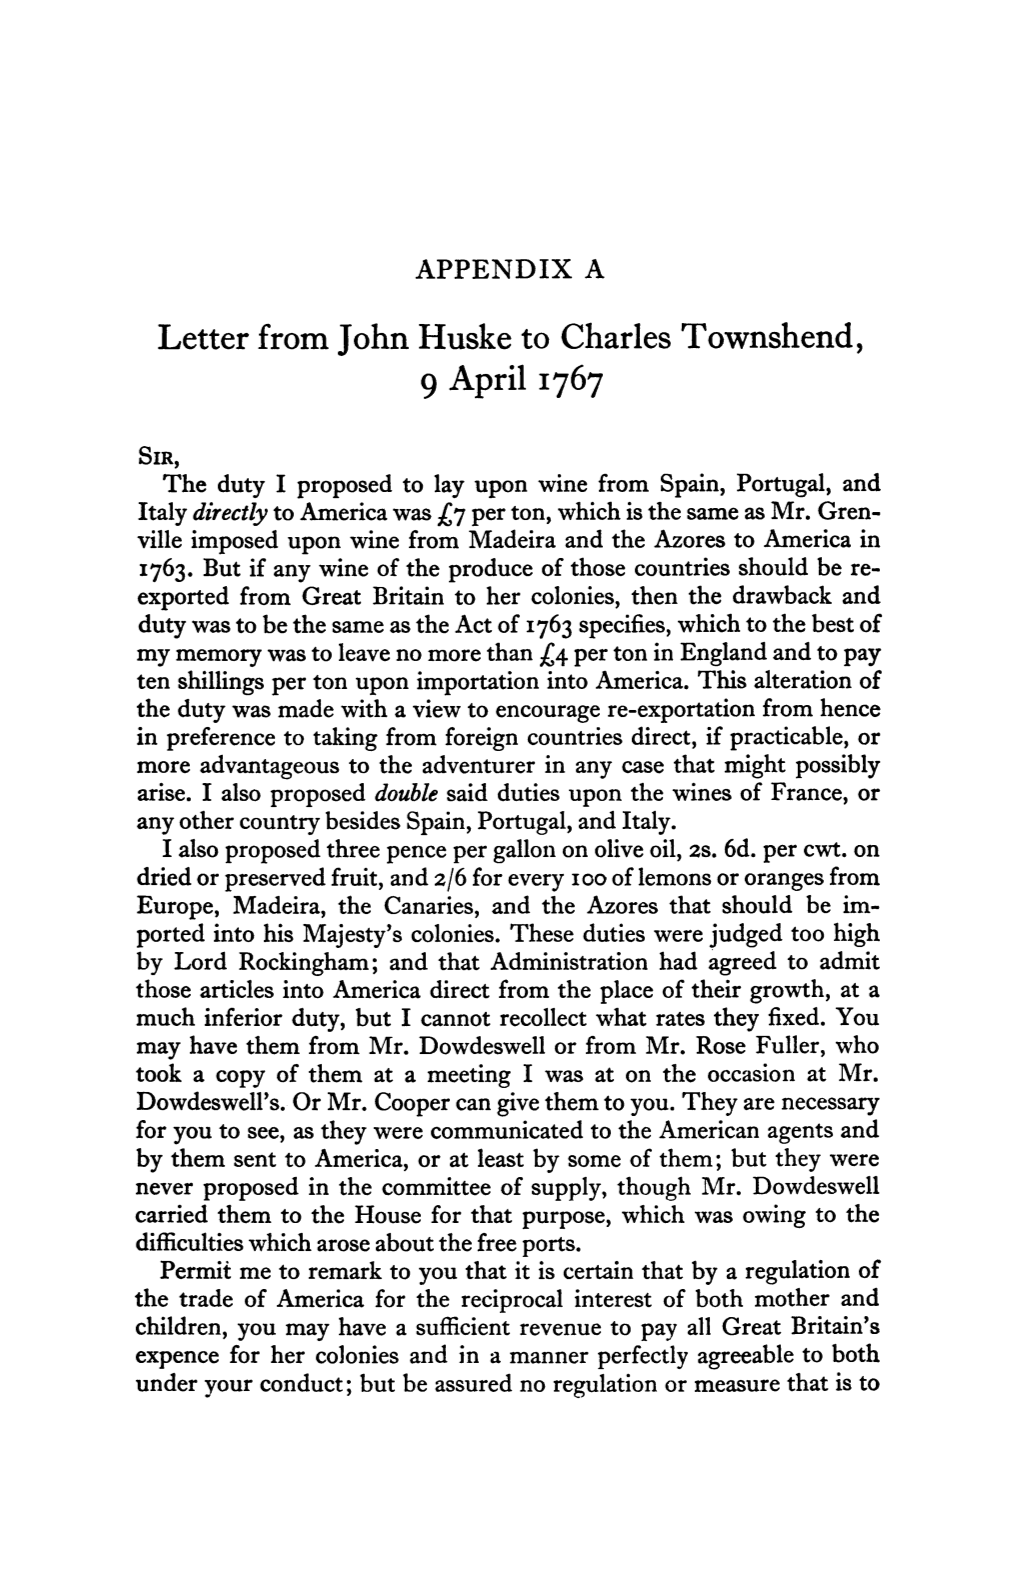 Letter from John Huske to Charles Townshend, 9 April 1767